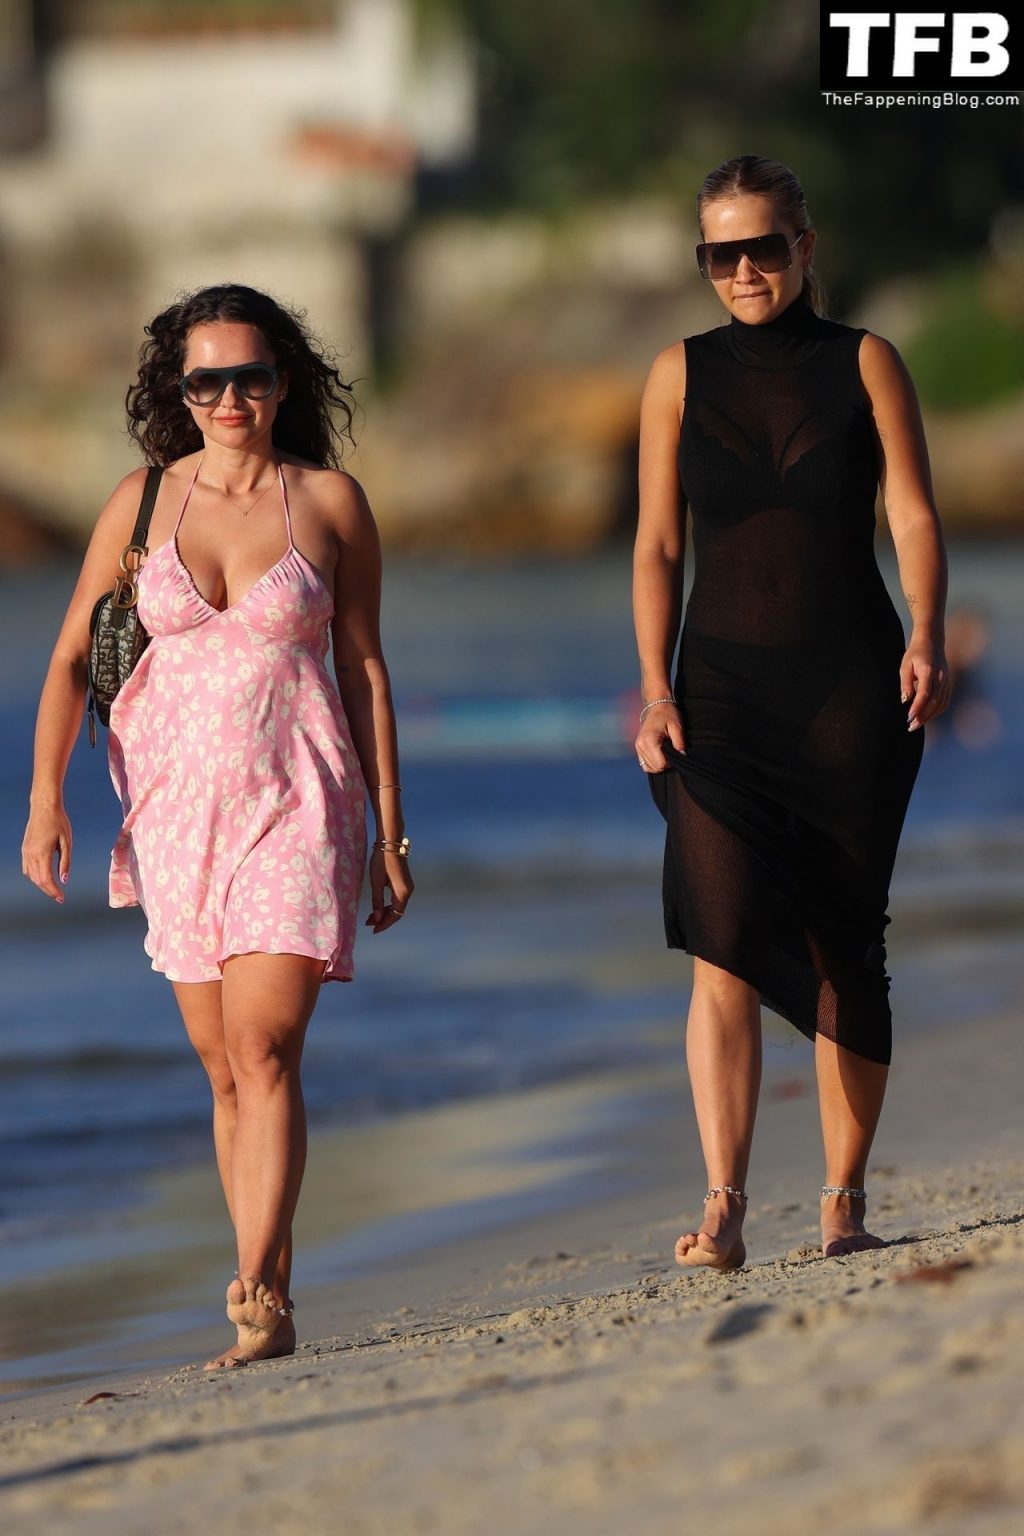 Rita Ora Looks Hot in a Sexy Black Sheer Dress in Sydney (120 Photos)